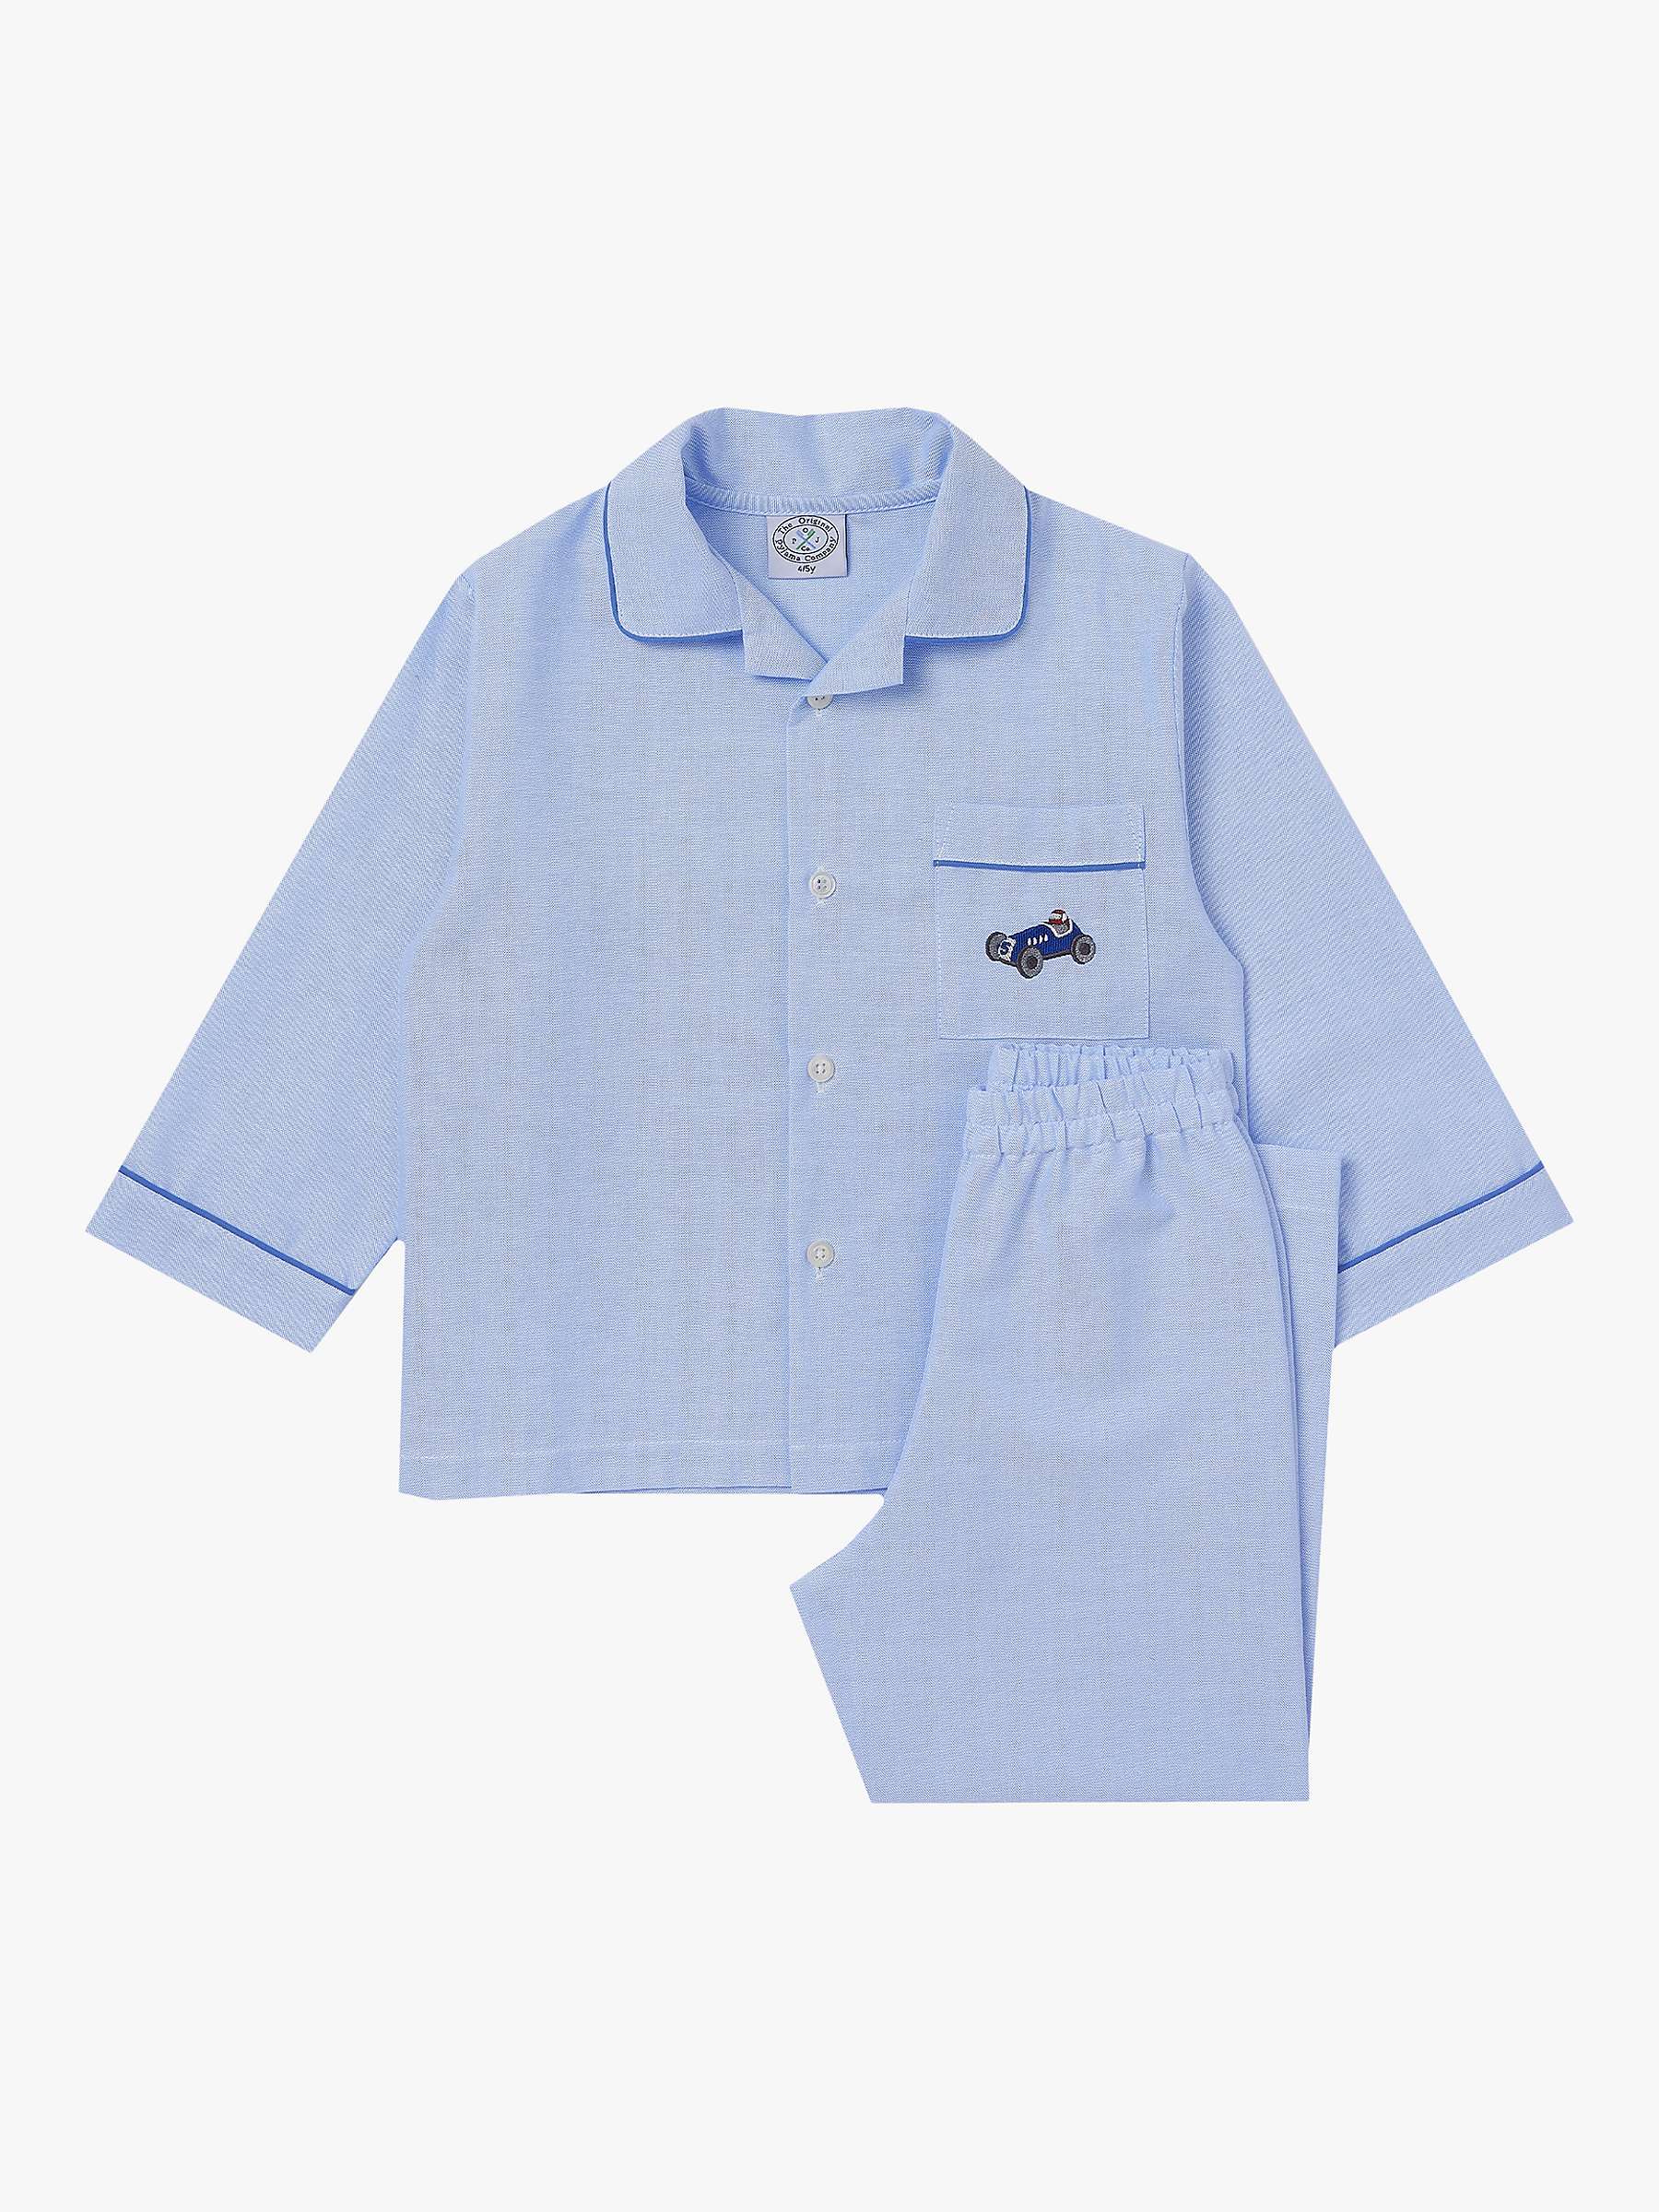 Buy Trotters Original Pyjama Company Kids' Henry Cotton Pyjamas, Pale Blue Chambray Online at johnlewis.com